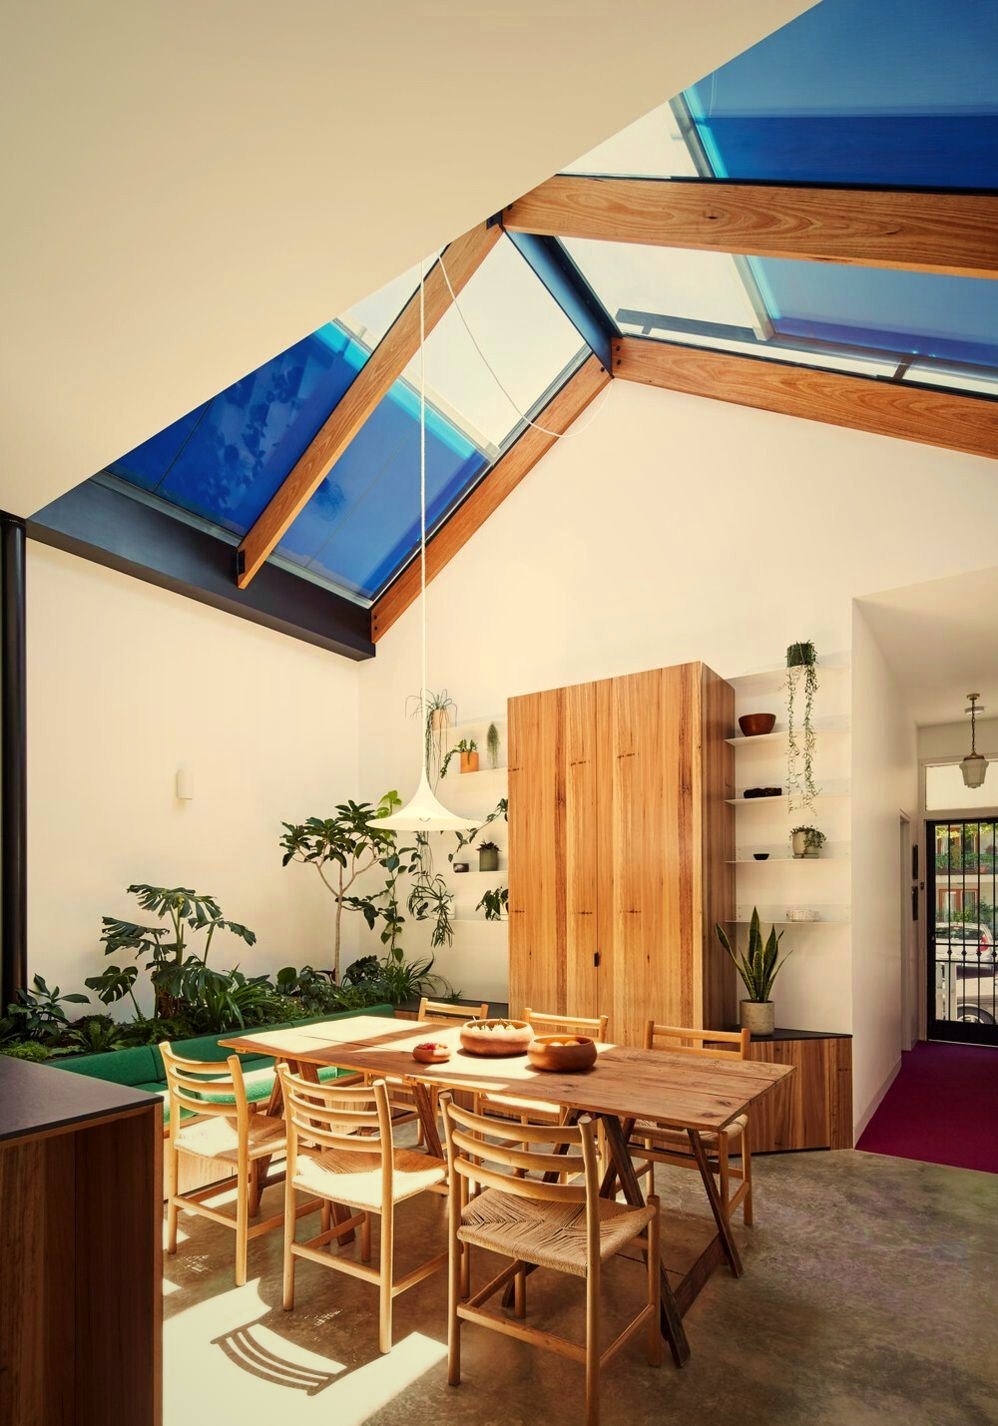 /wp-content/uploads/2020/12/Modern-wooden-kitchen-model-with-adjustable-transparent-roof-to-support-indoor-garden-improving-more-natural-vibe-2.jpg